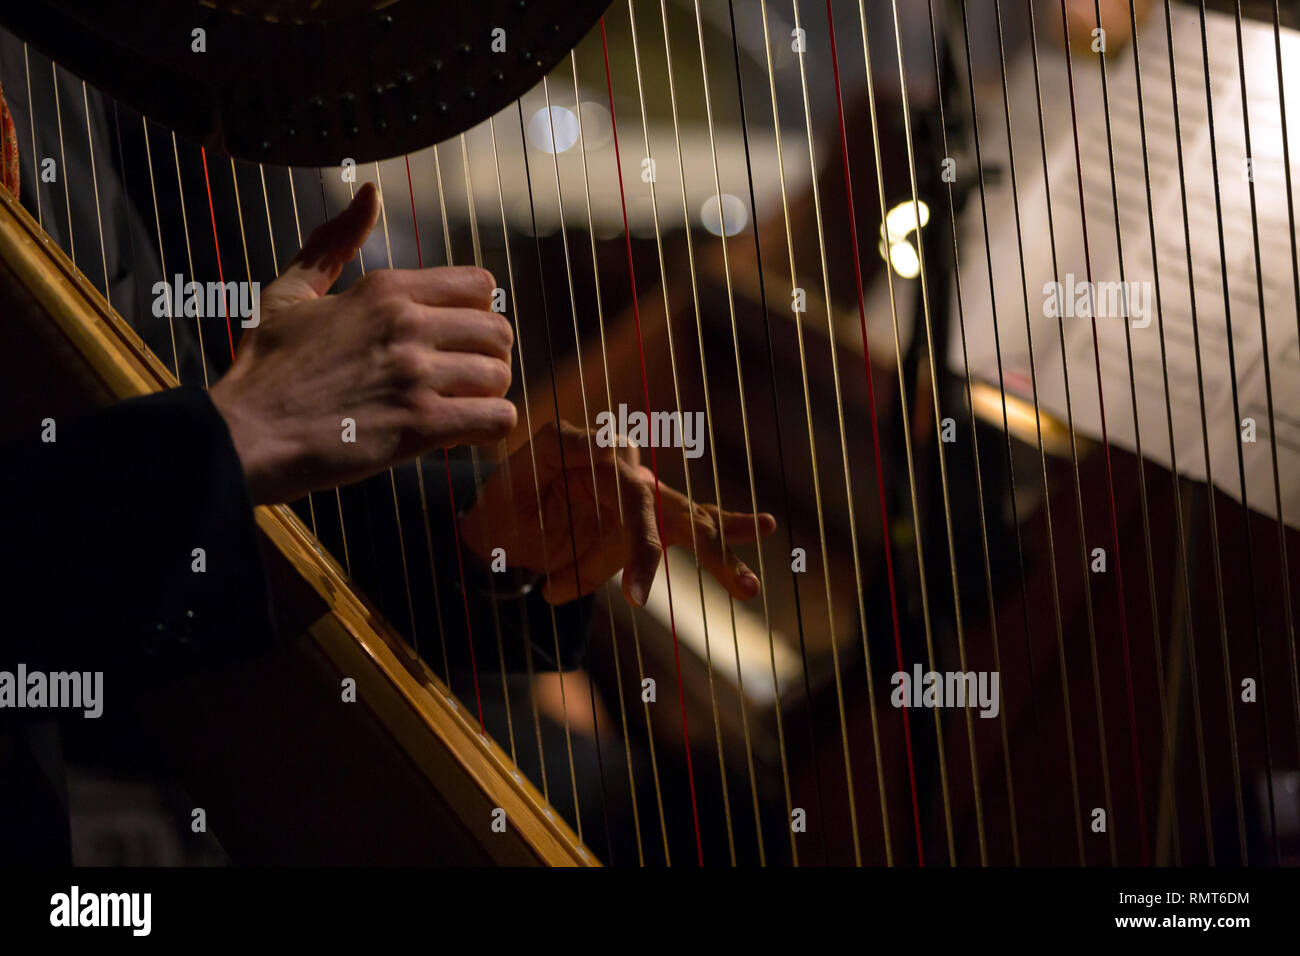 mal hand playing the harp Stock Photo